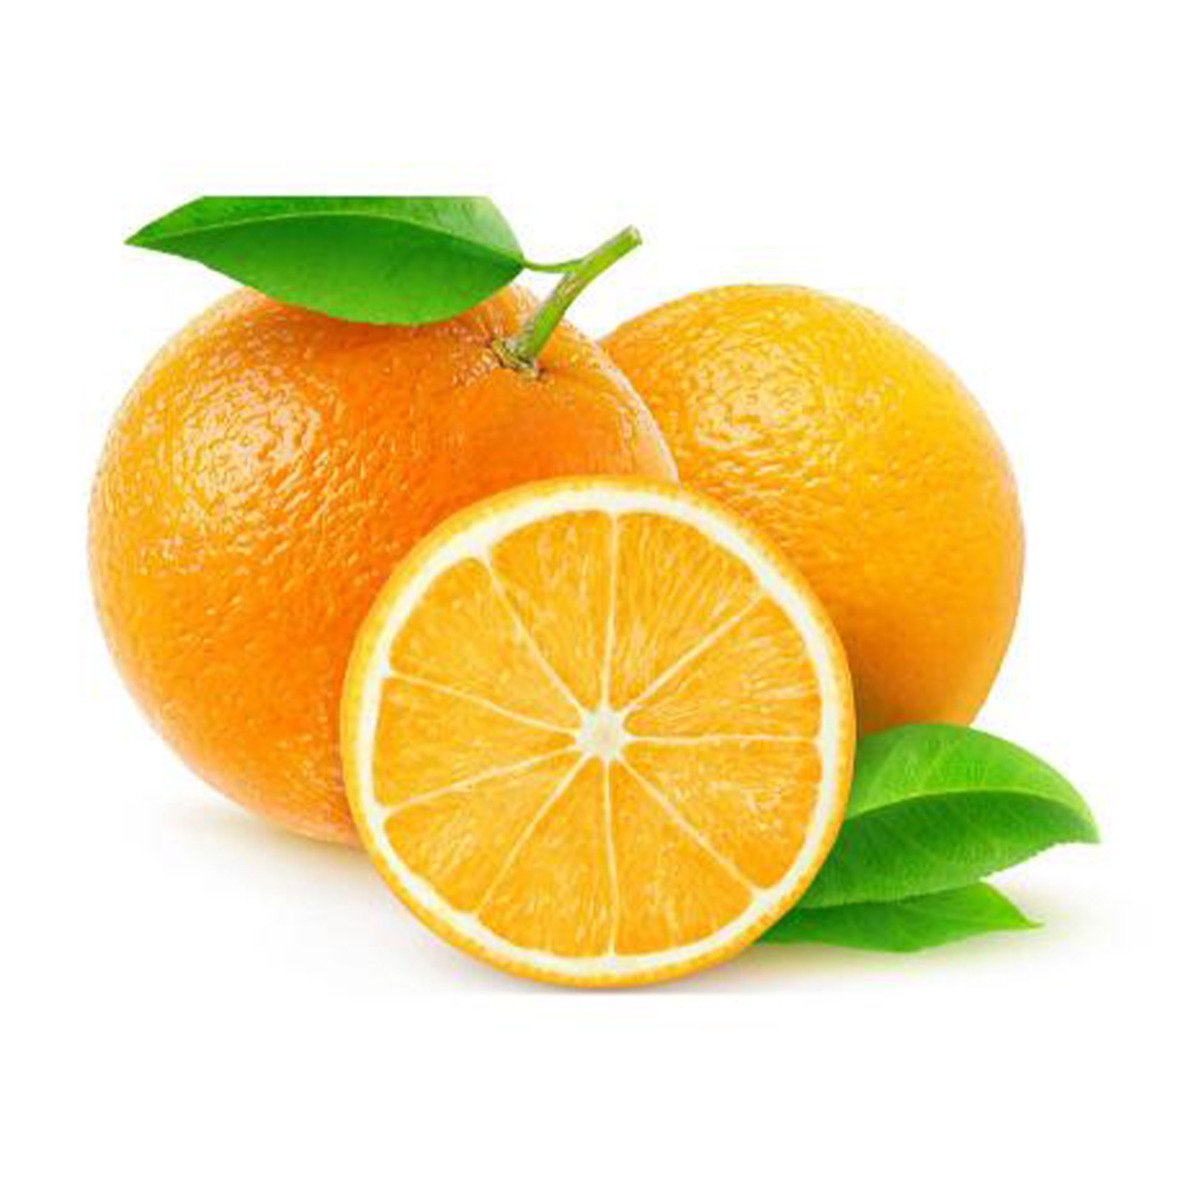 Orange Navel Spain 1kg